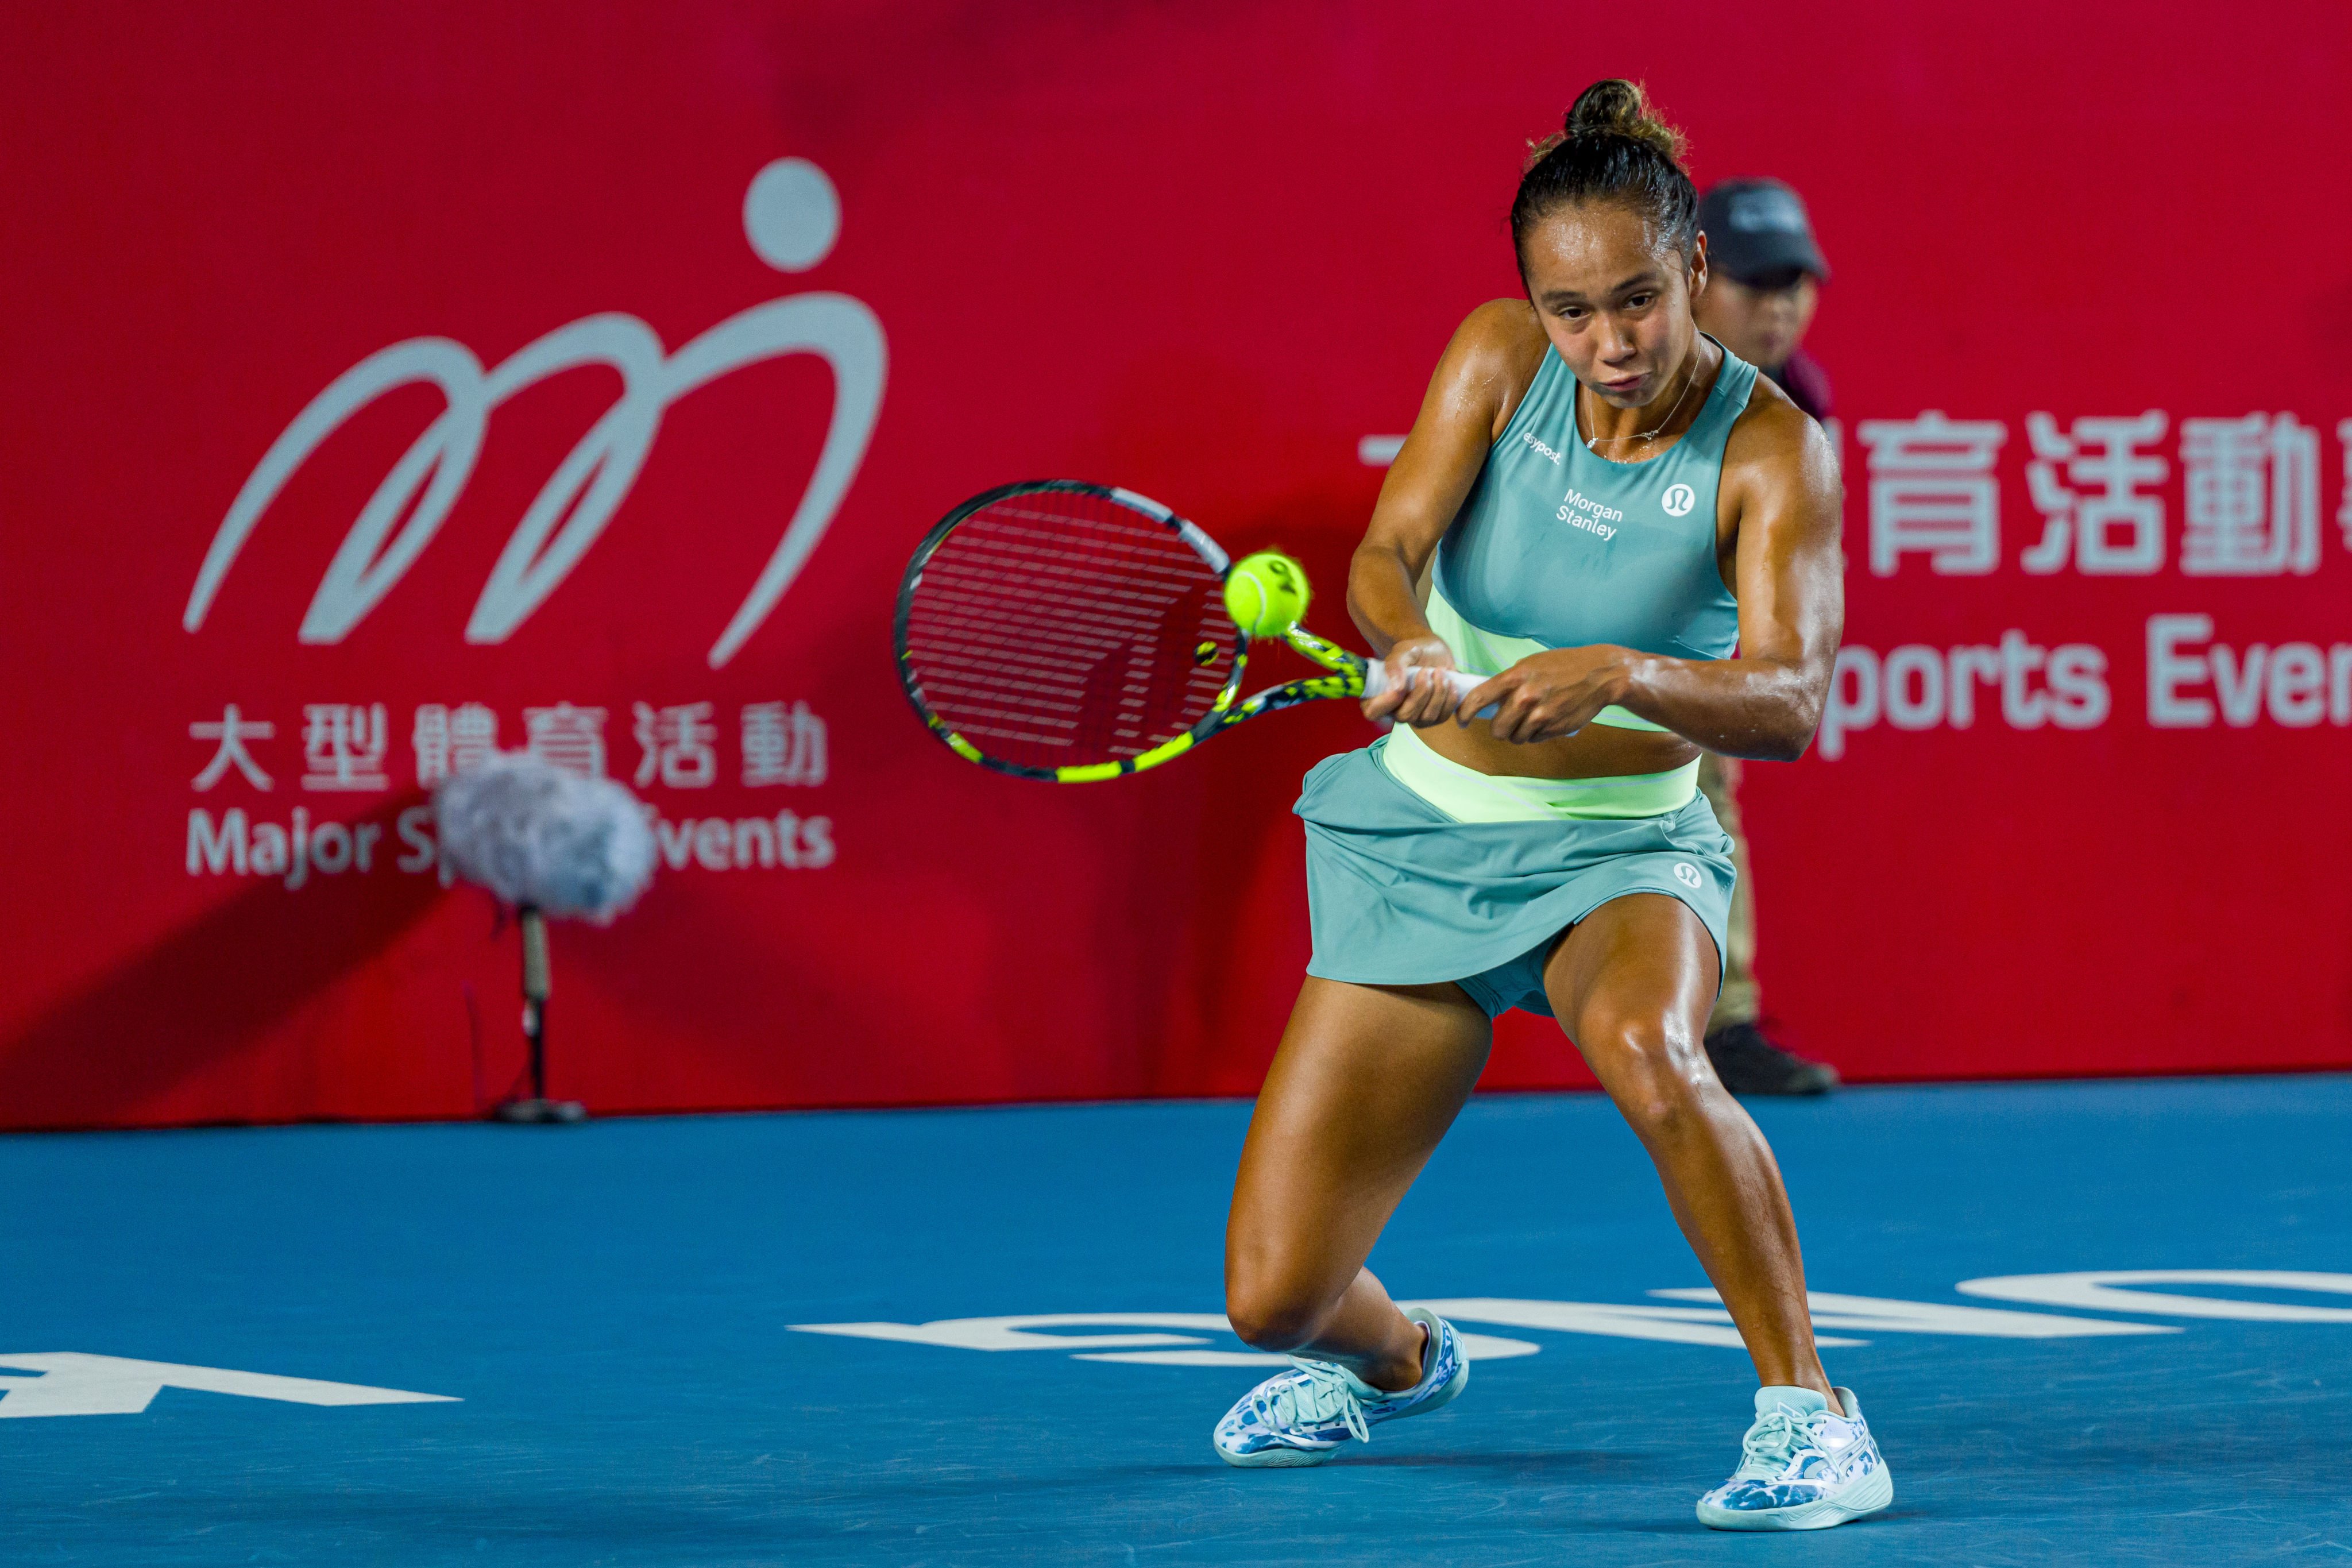 Leylah Fernandez returns the ball to Linda Fruhvirtova at the Hong Kong Tennis Open. Photos: Hong Kong Tennis Open/ArcK Photography